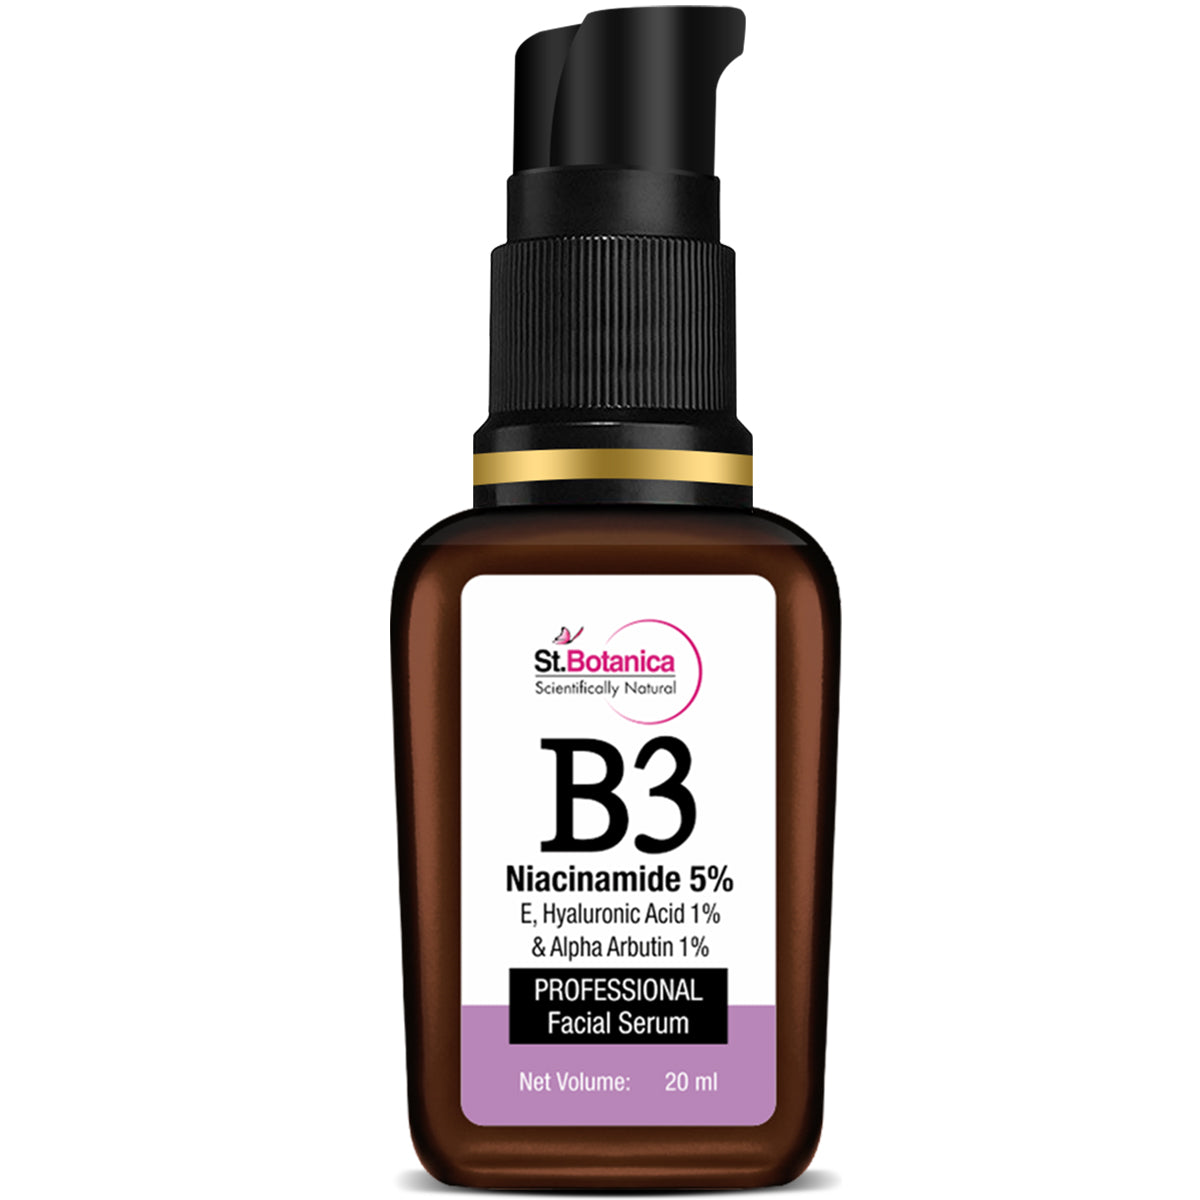 St.Botanica Niacinamide 5%, E + Hyaluronic Acid 1%, Alpha Arbutin 1% Face Serum for Oil-Free, Hydrated & Bright Skin | Pore Reducing Serum, 20 ml